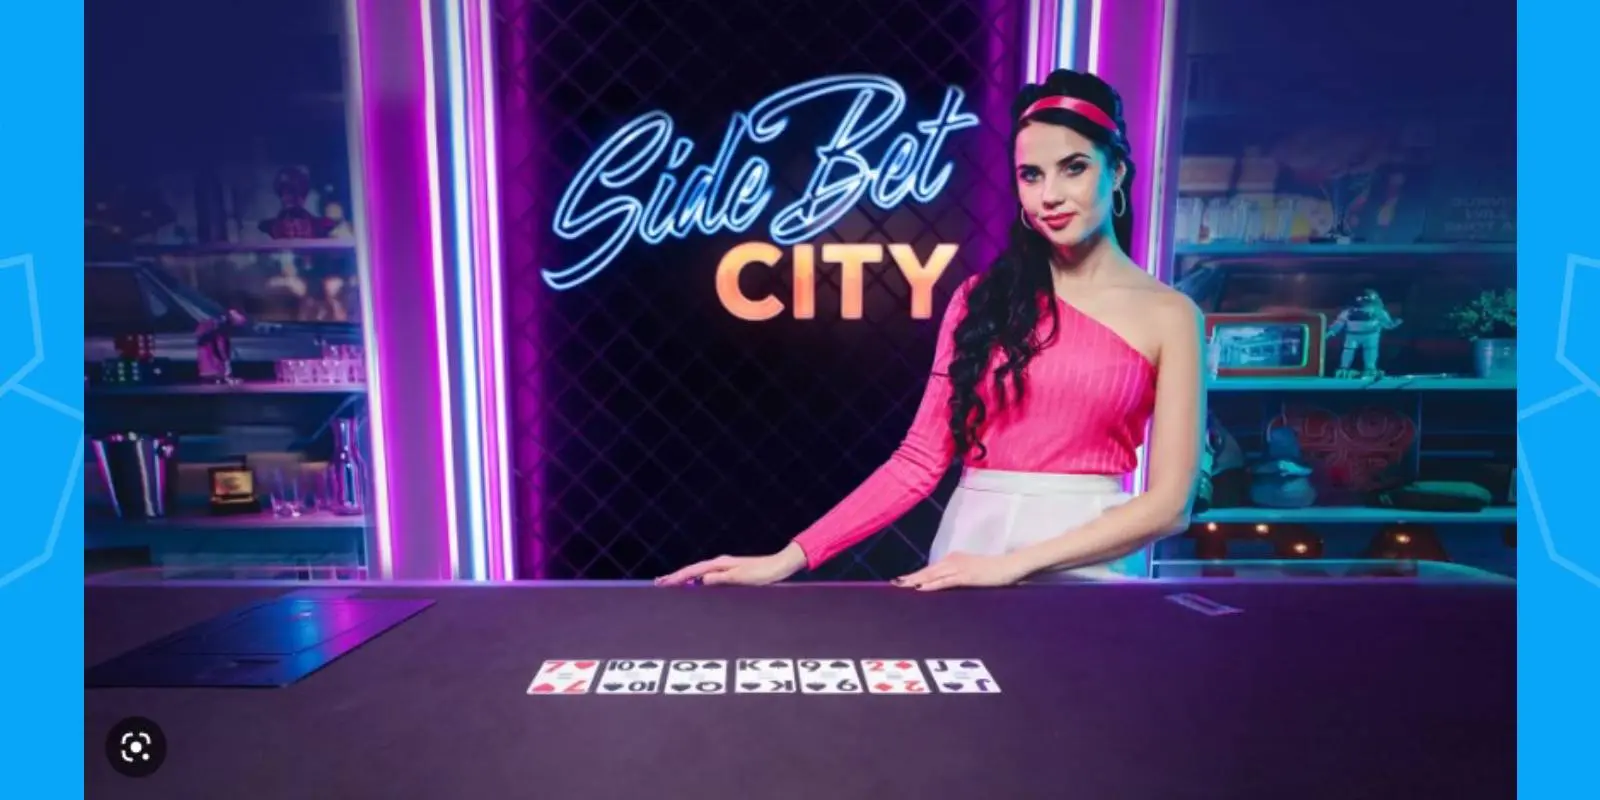 Live Side Bet City casino game